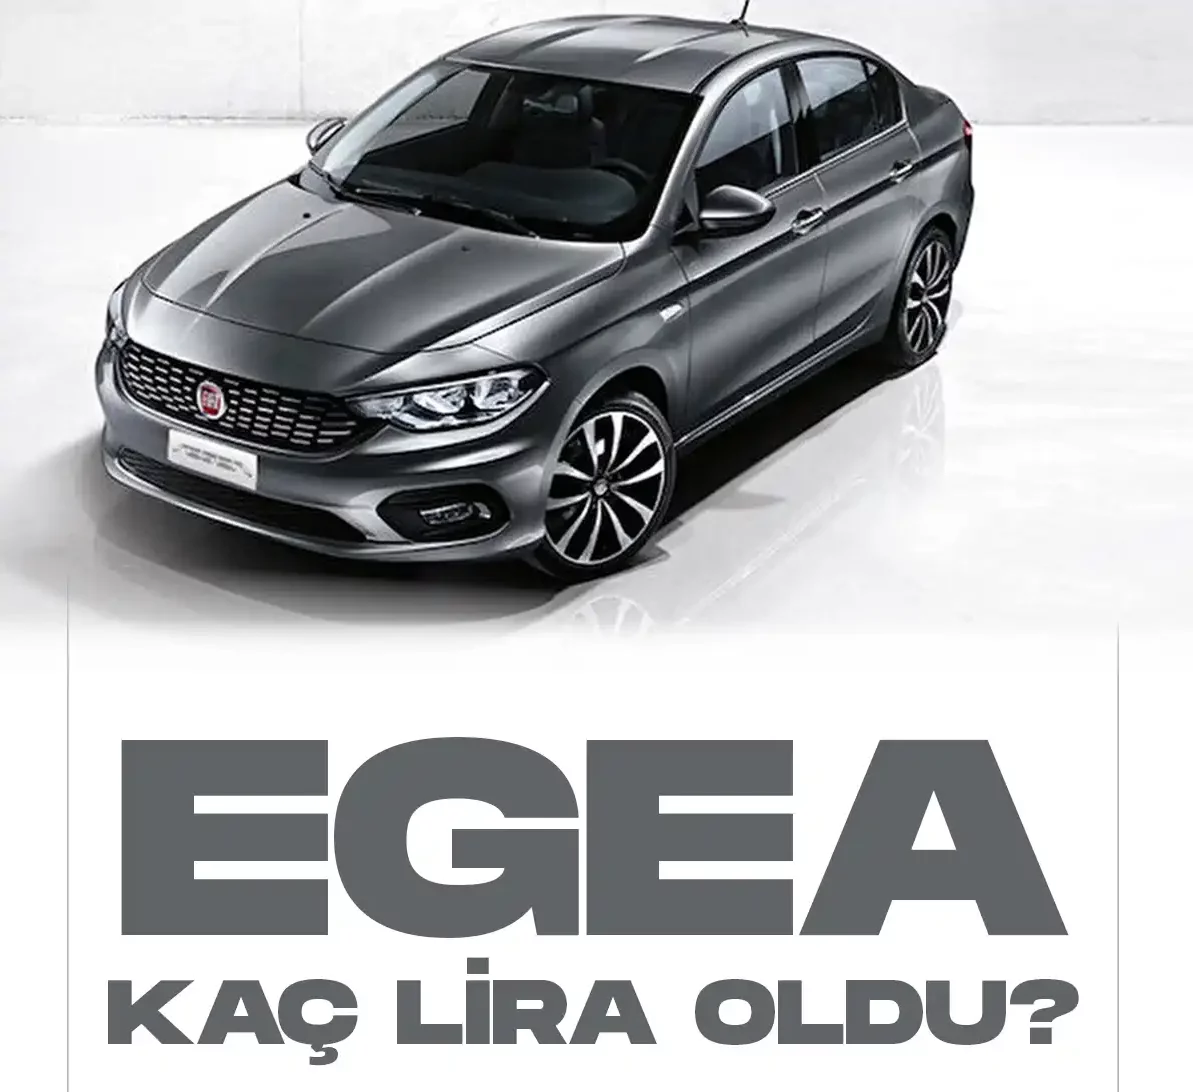 Fiat Egea kaç lira oldu?